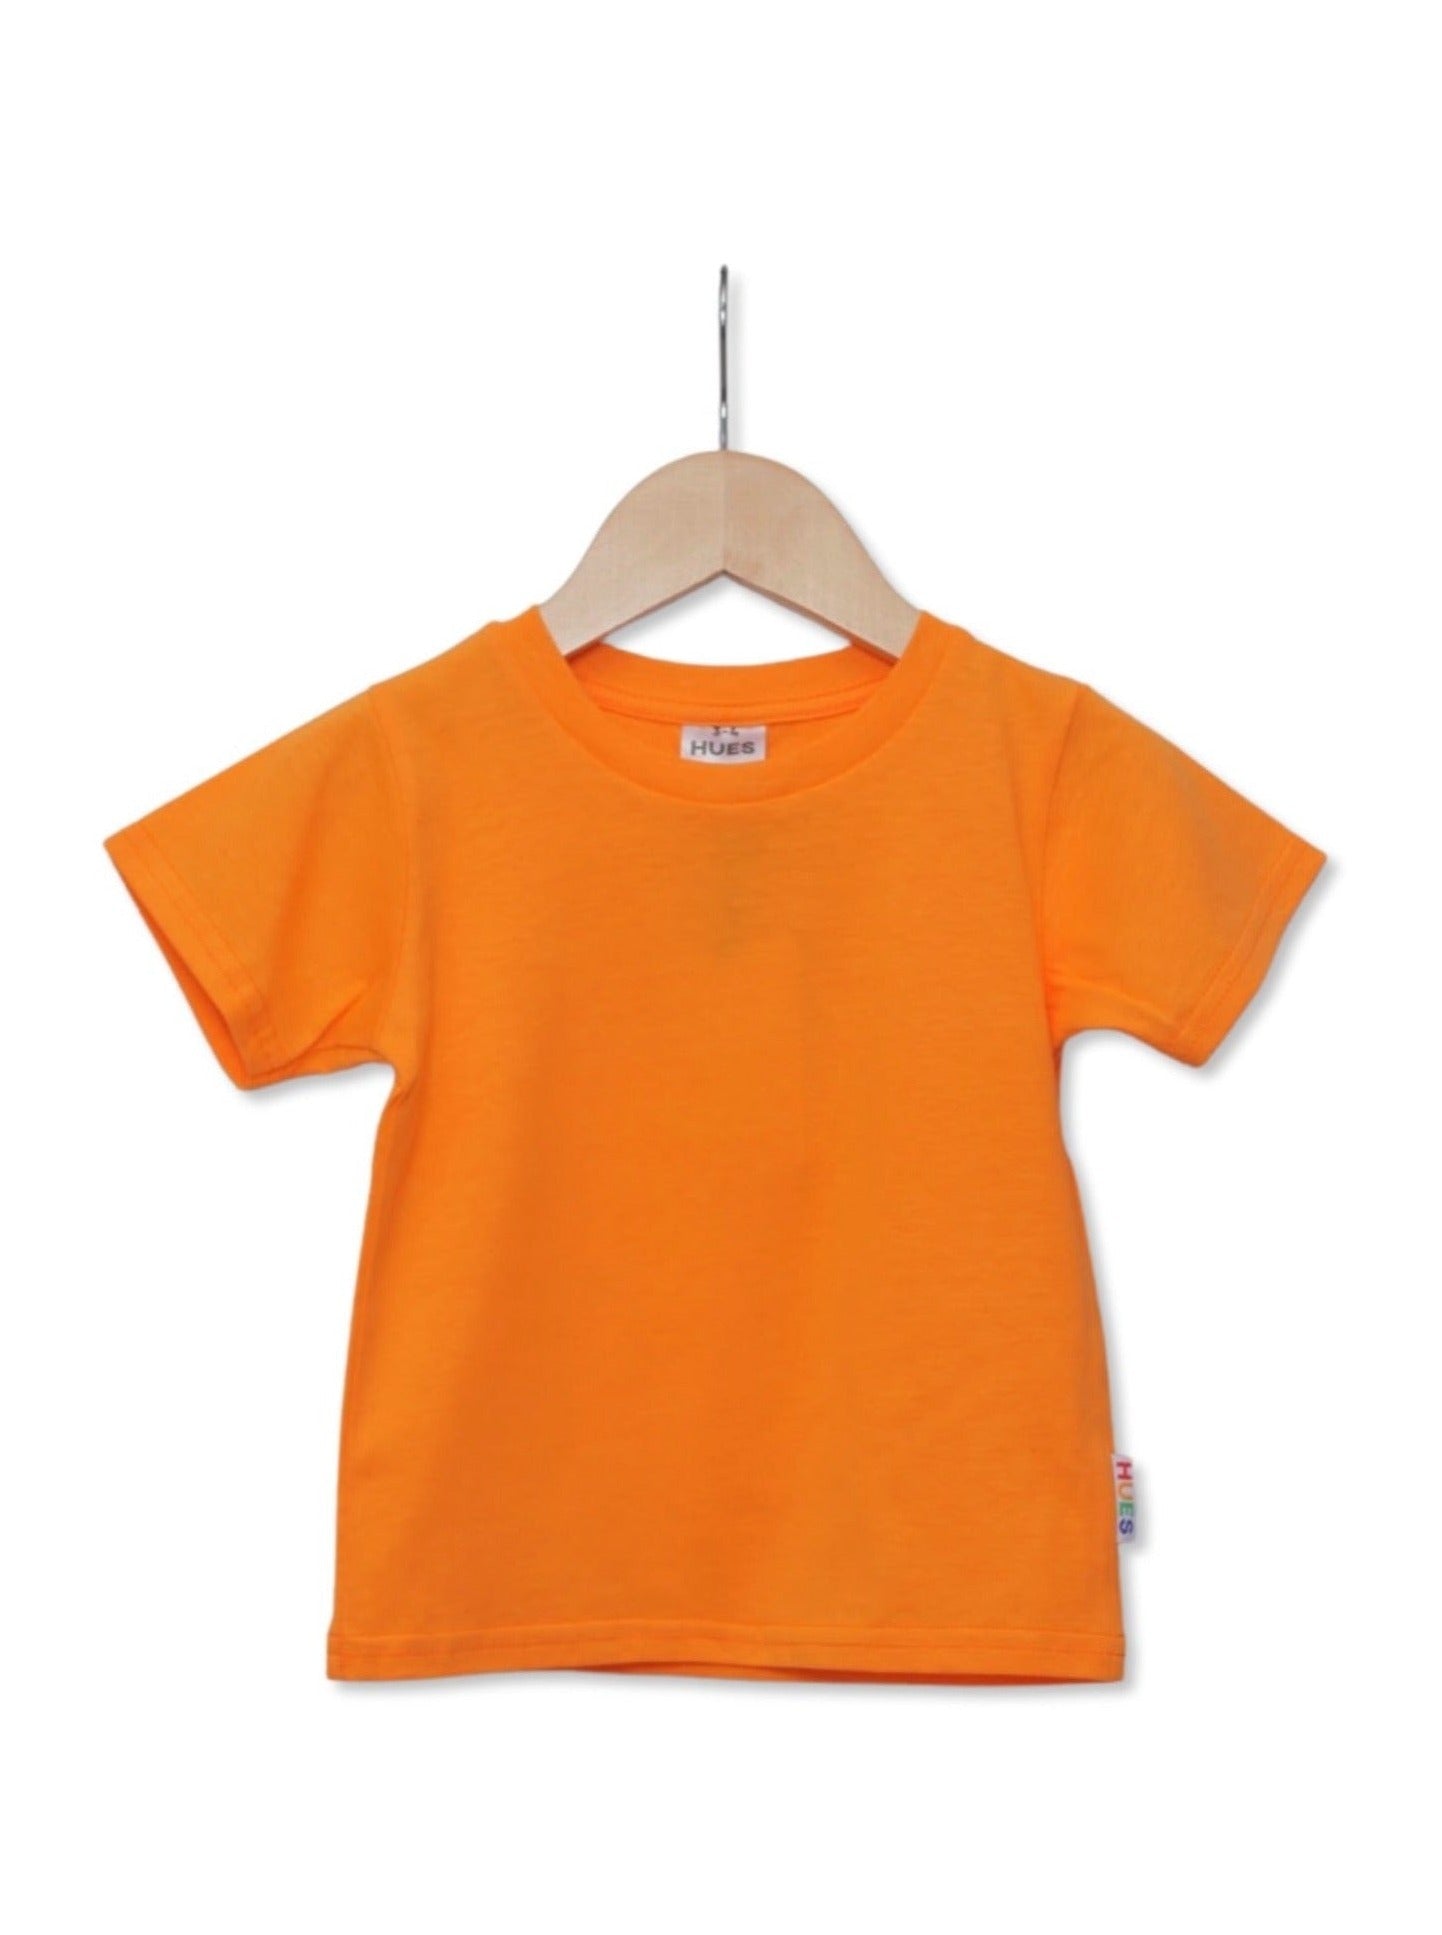 Kids Unisex Orange T-shirt Front View - Hues Clothing